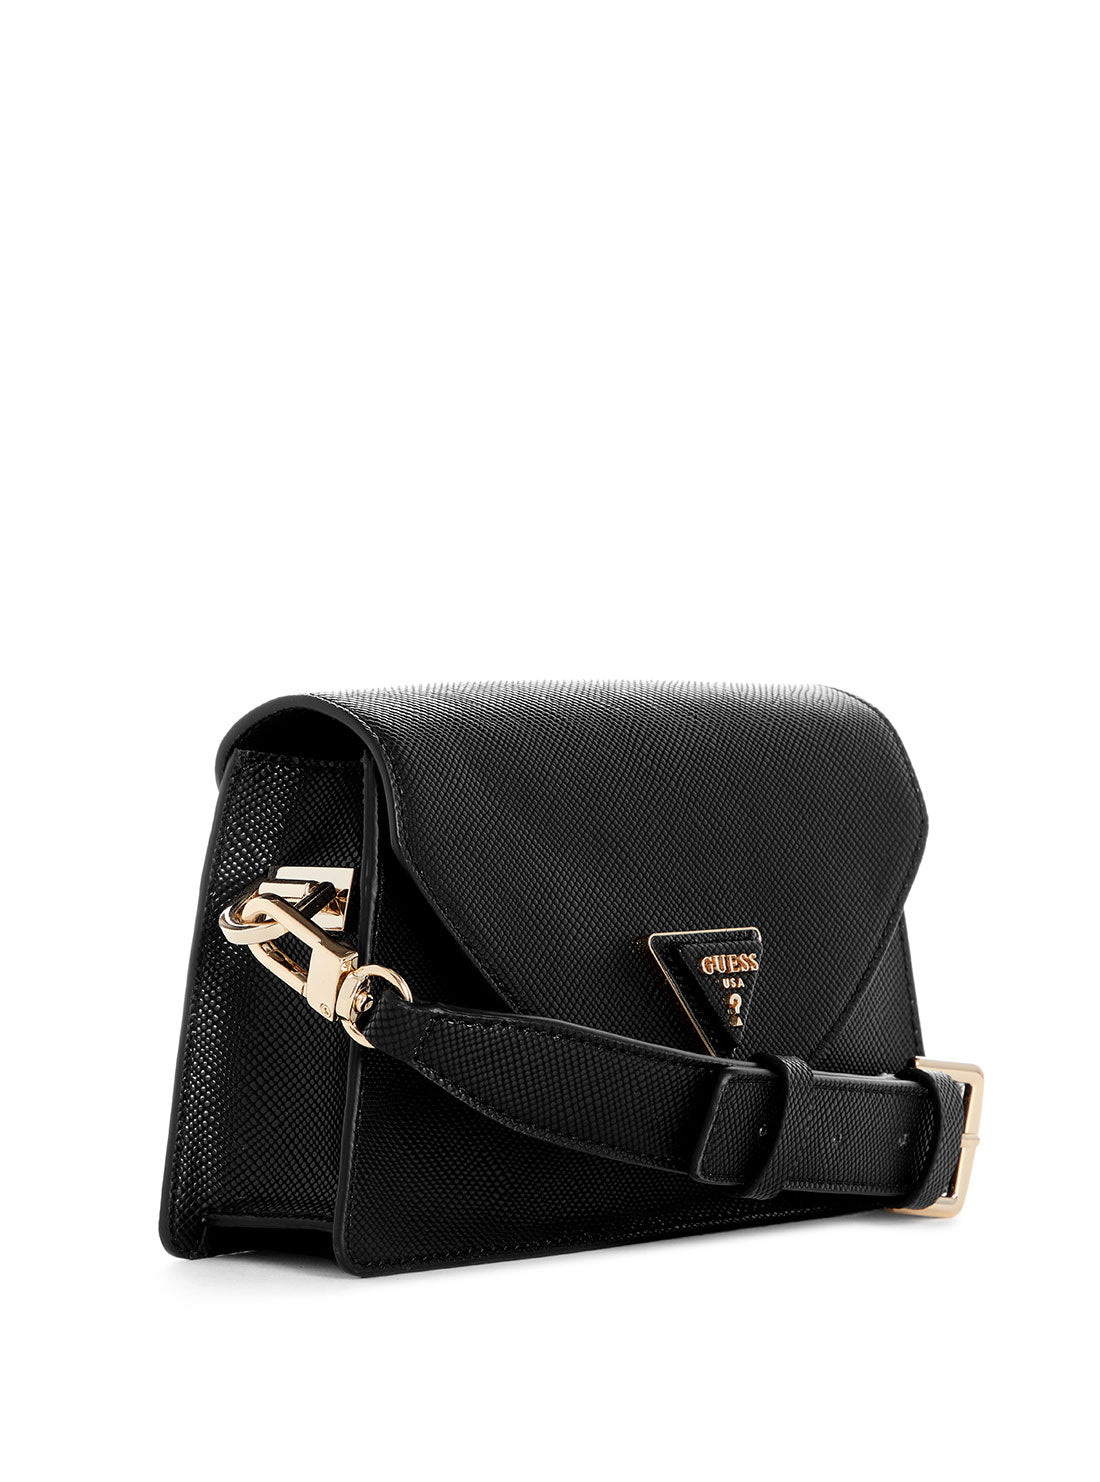 GUESS Black Avis Mini Shoulder Bag side view